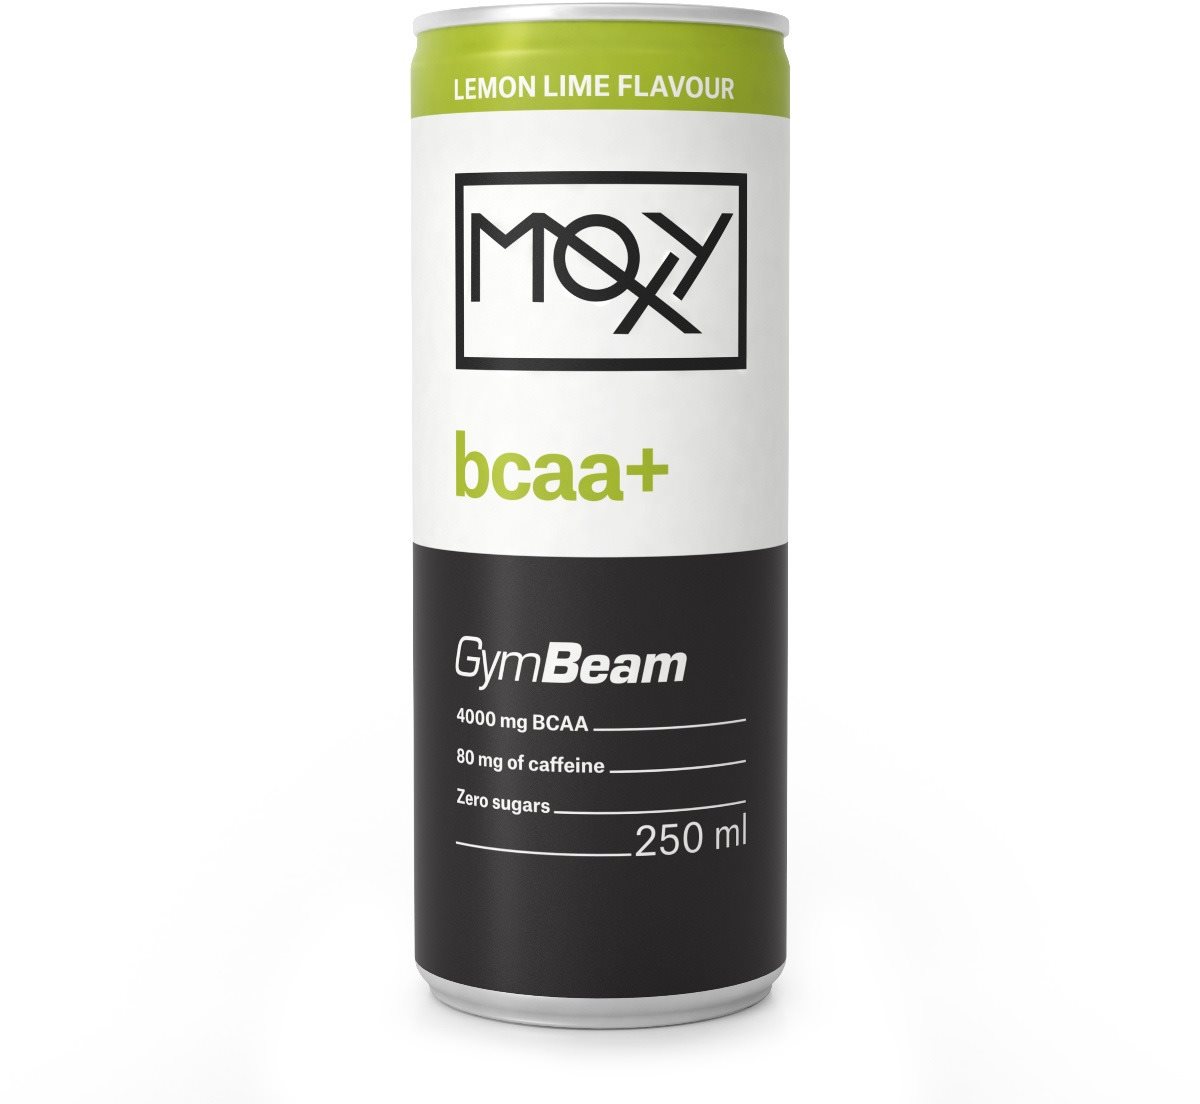 GymBeam MOXY BCAA + Energy Drink 250 ml